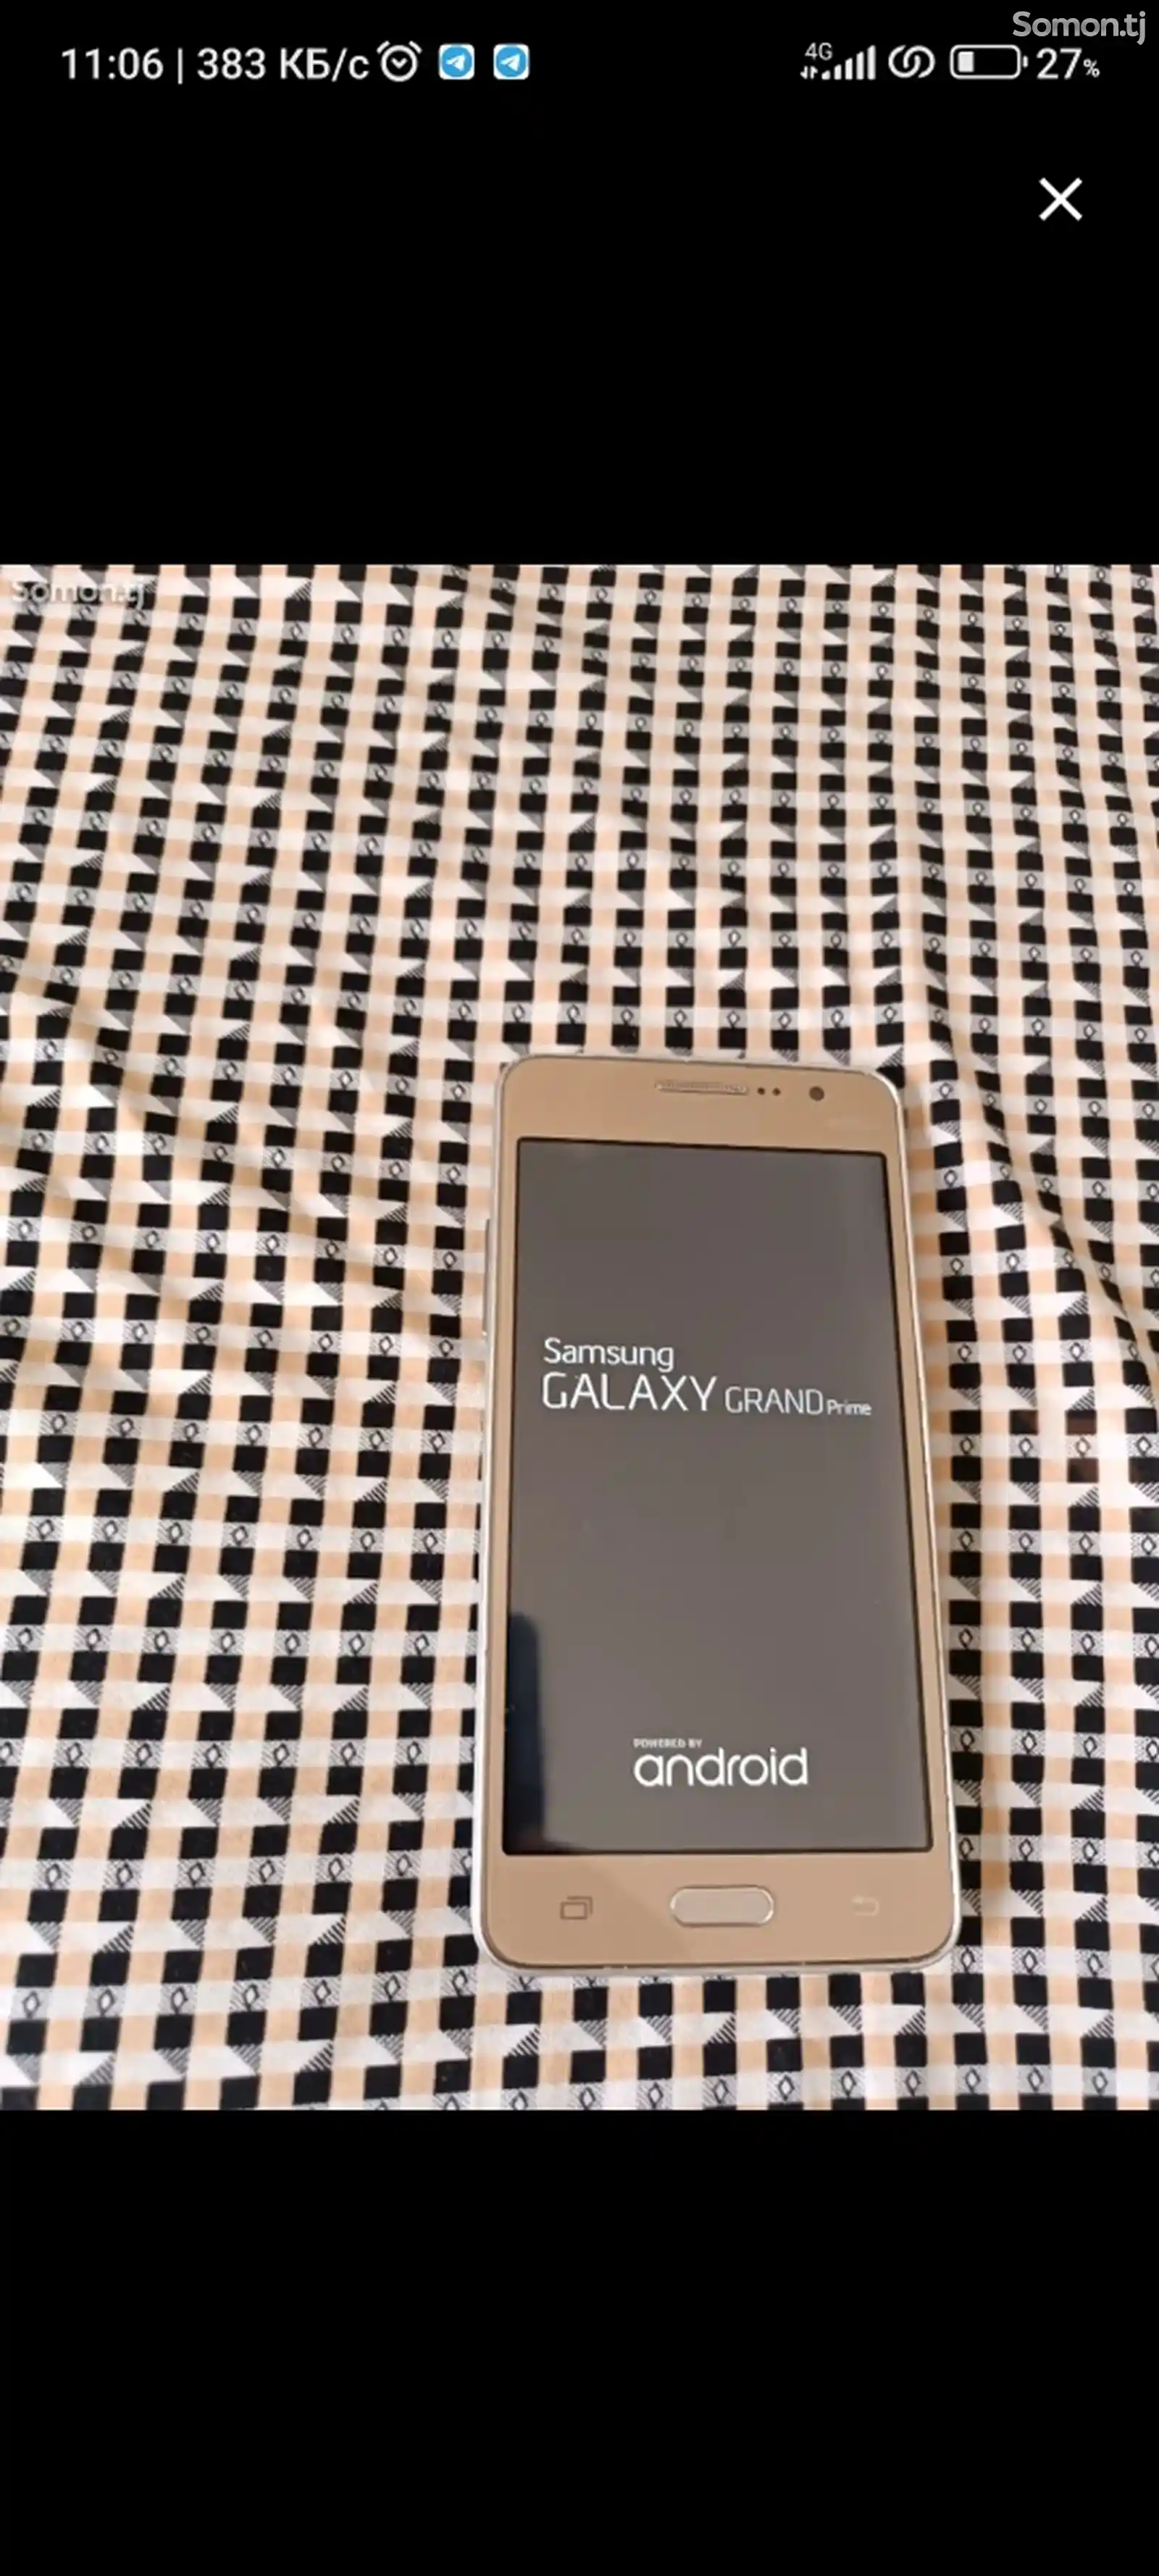 Samsung Galaxy Grand prime-1